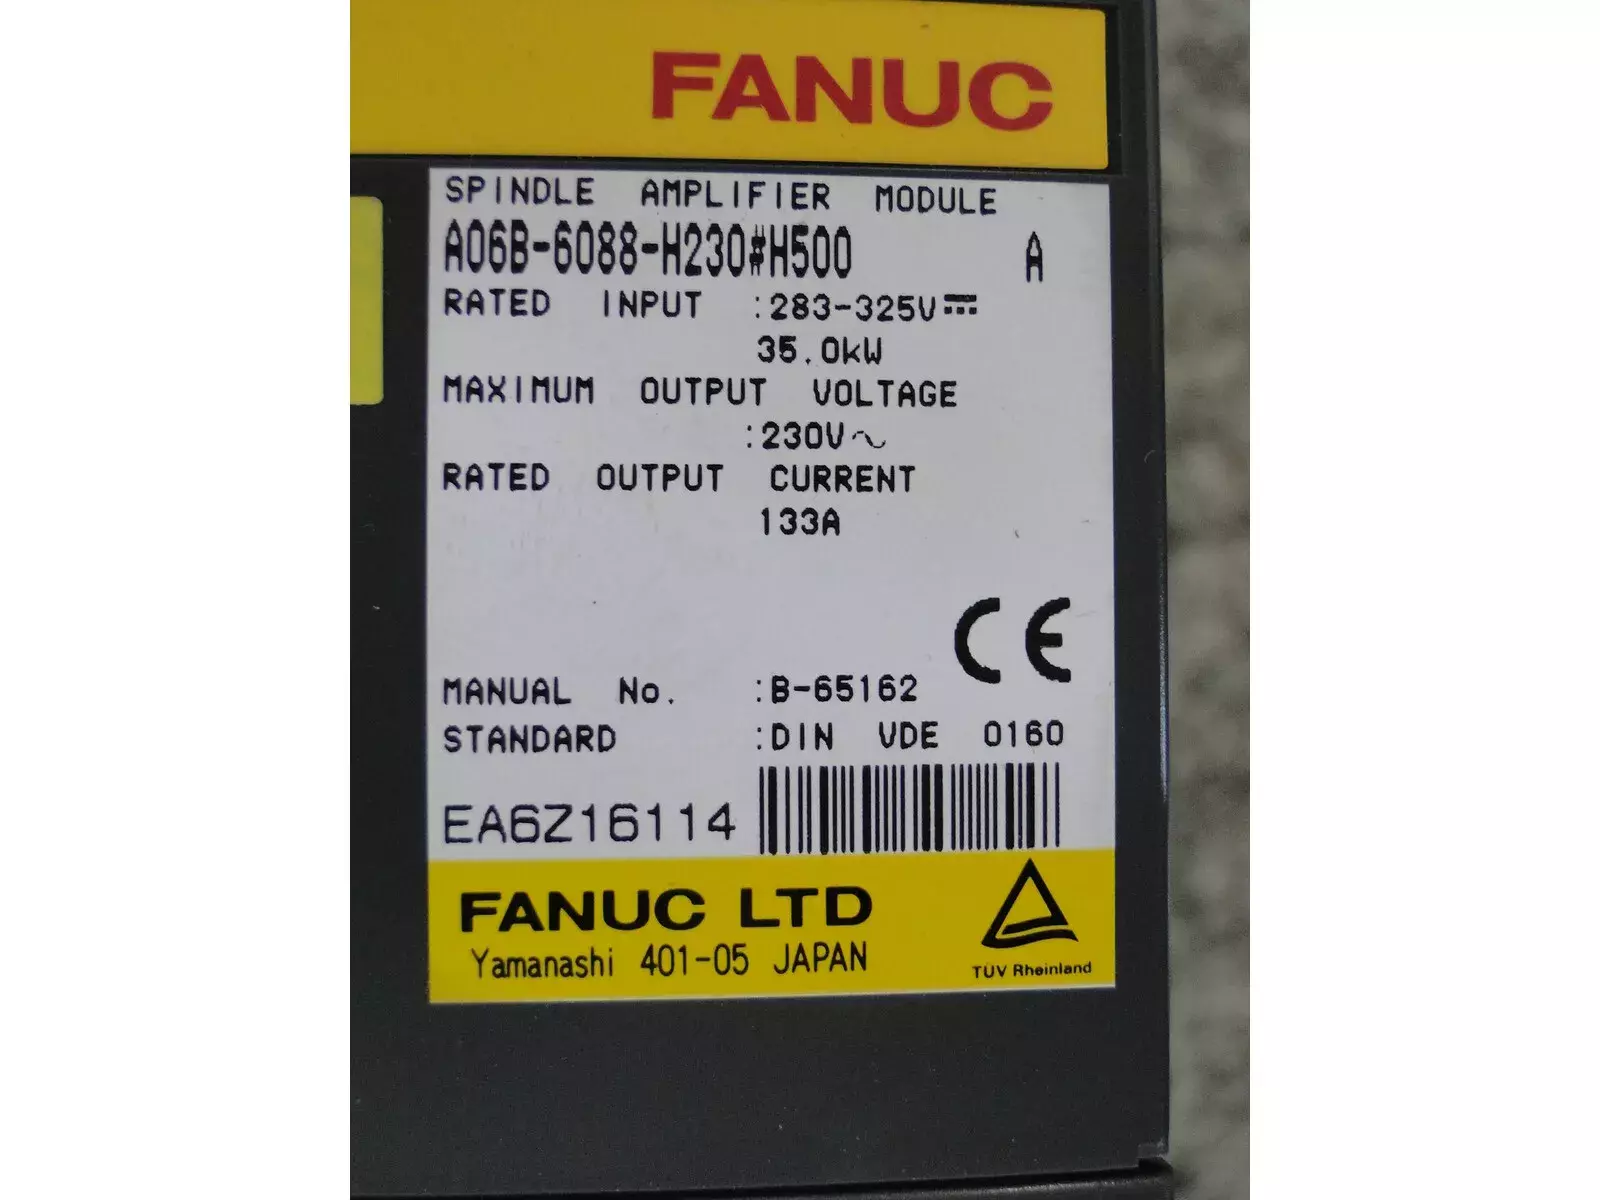 Fanuc A06B-6088-H230#H500 Spindle Amplifier